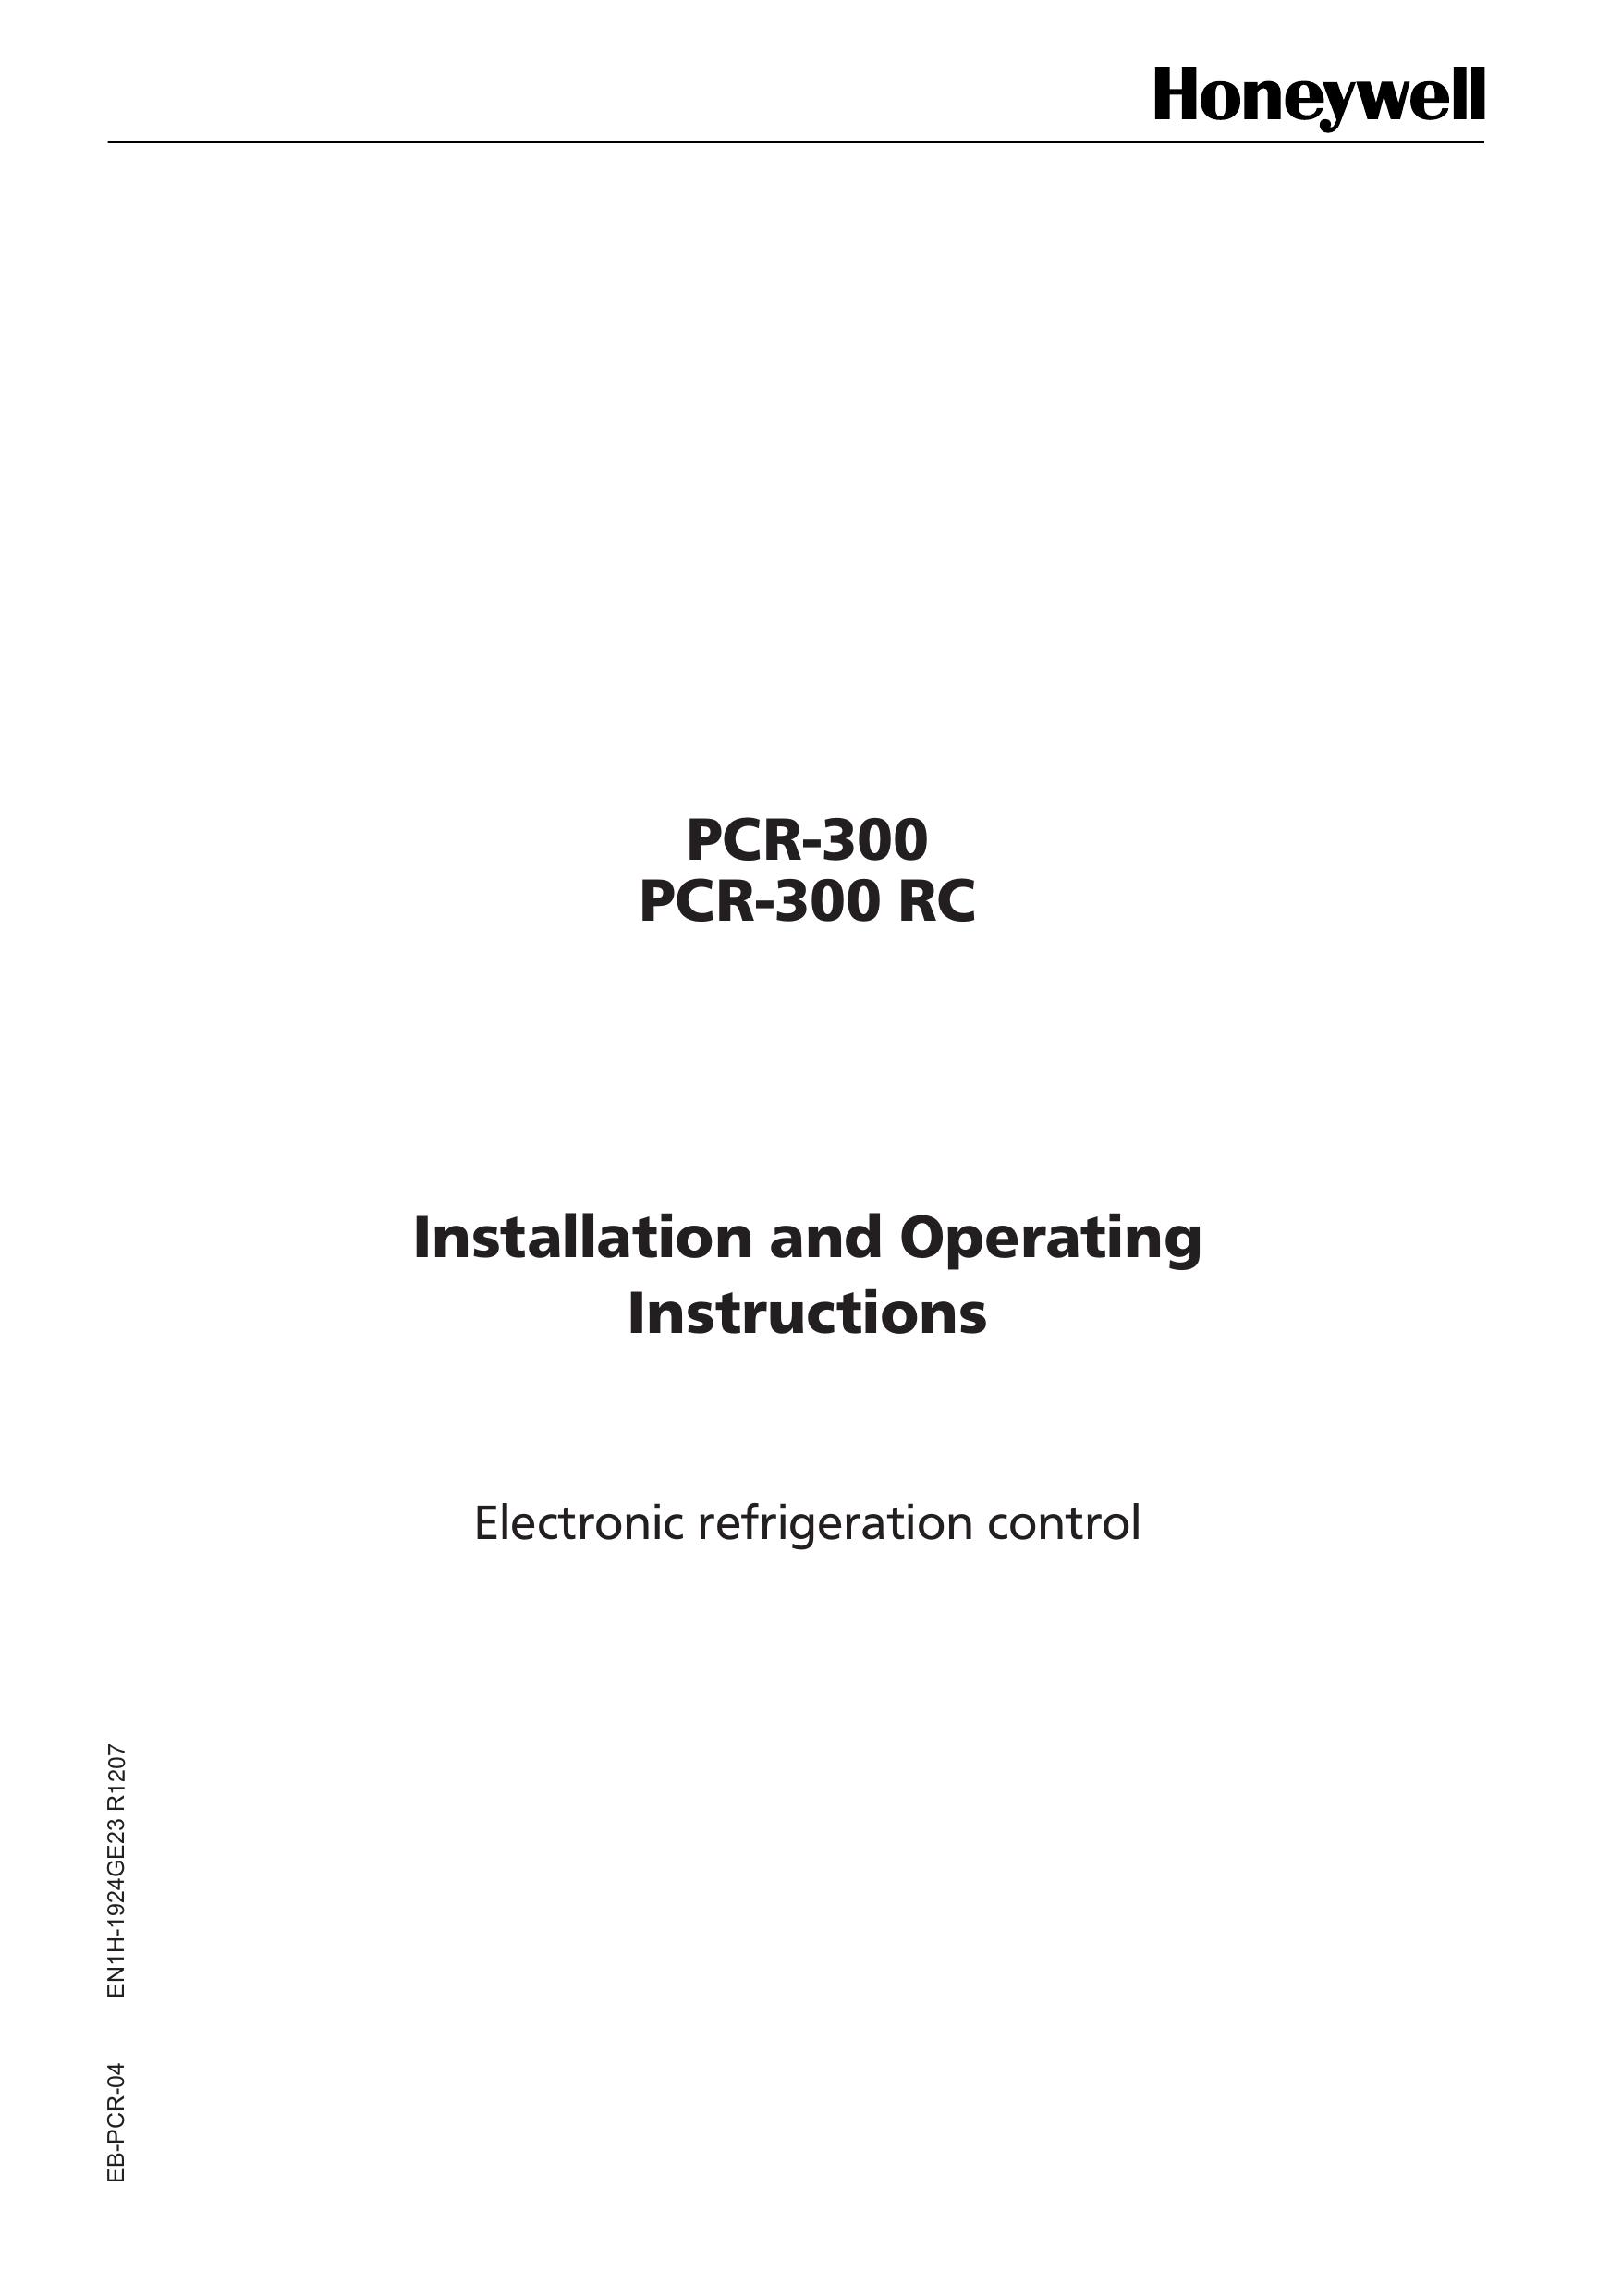 Honeywell PCR-300 Refrigerator User Manual